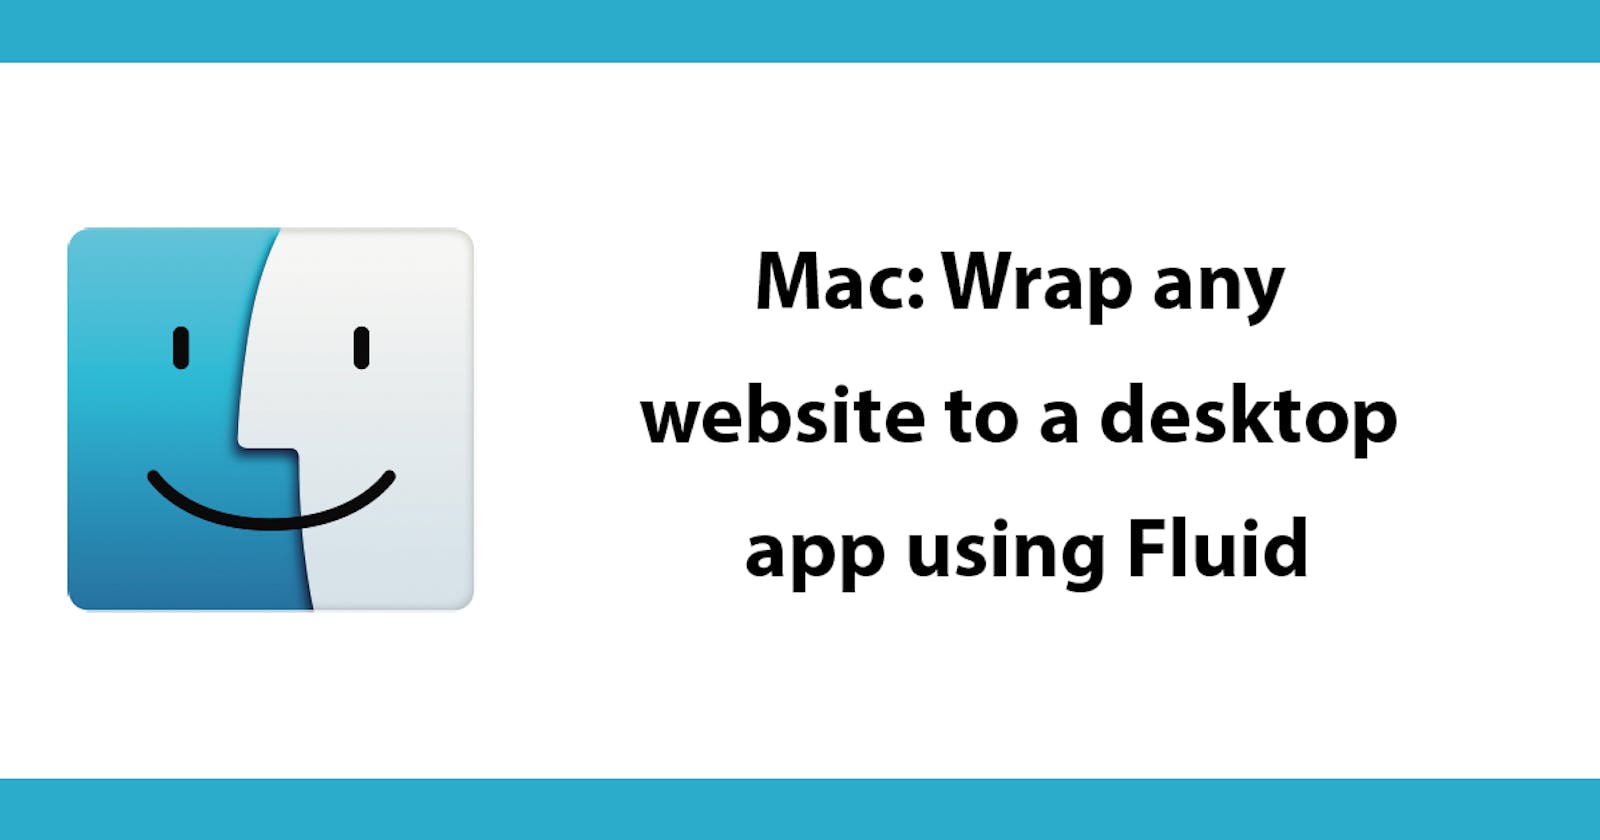 Mac: Wrap any website to a desktop app using Fluid